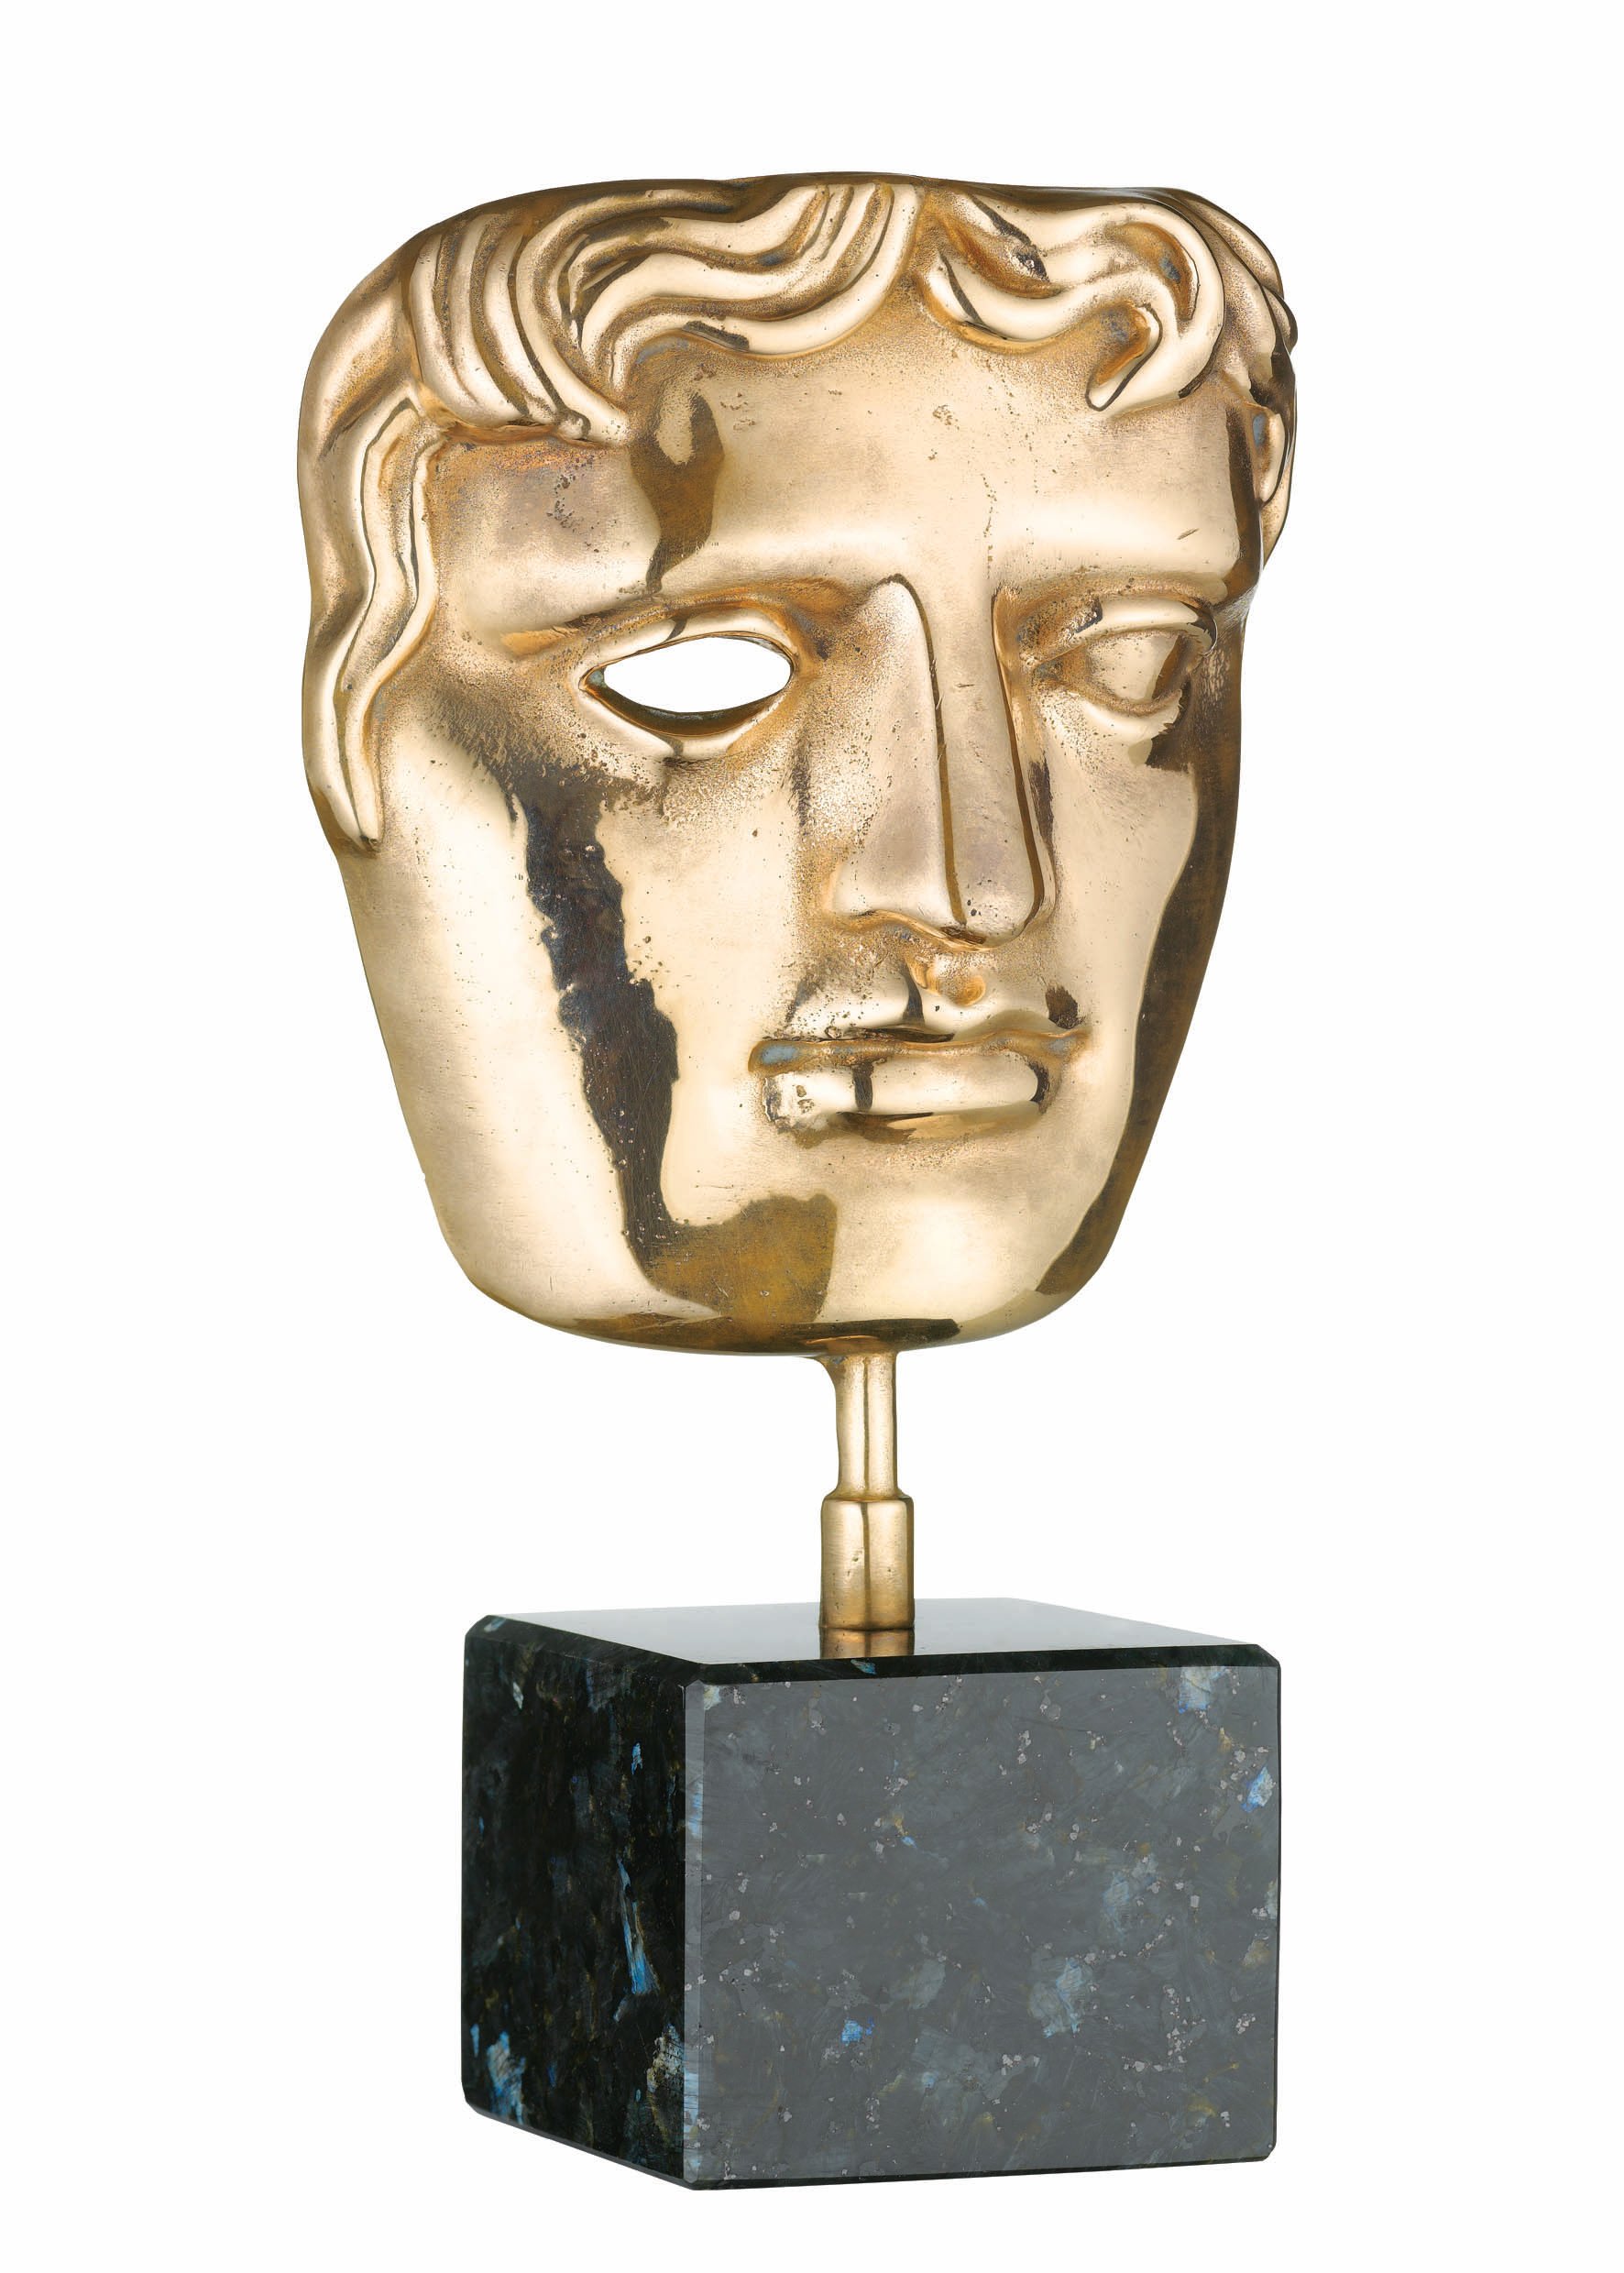 British Academy Film Awards